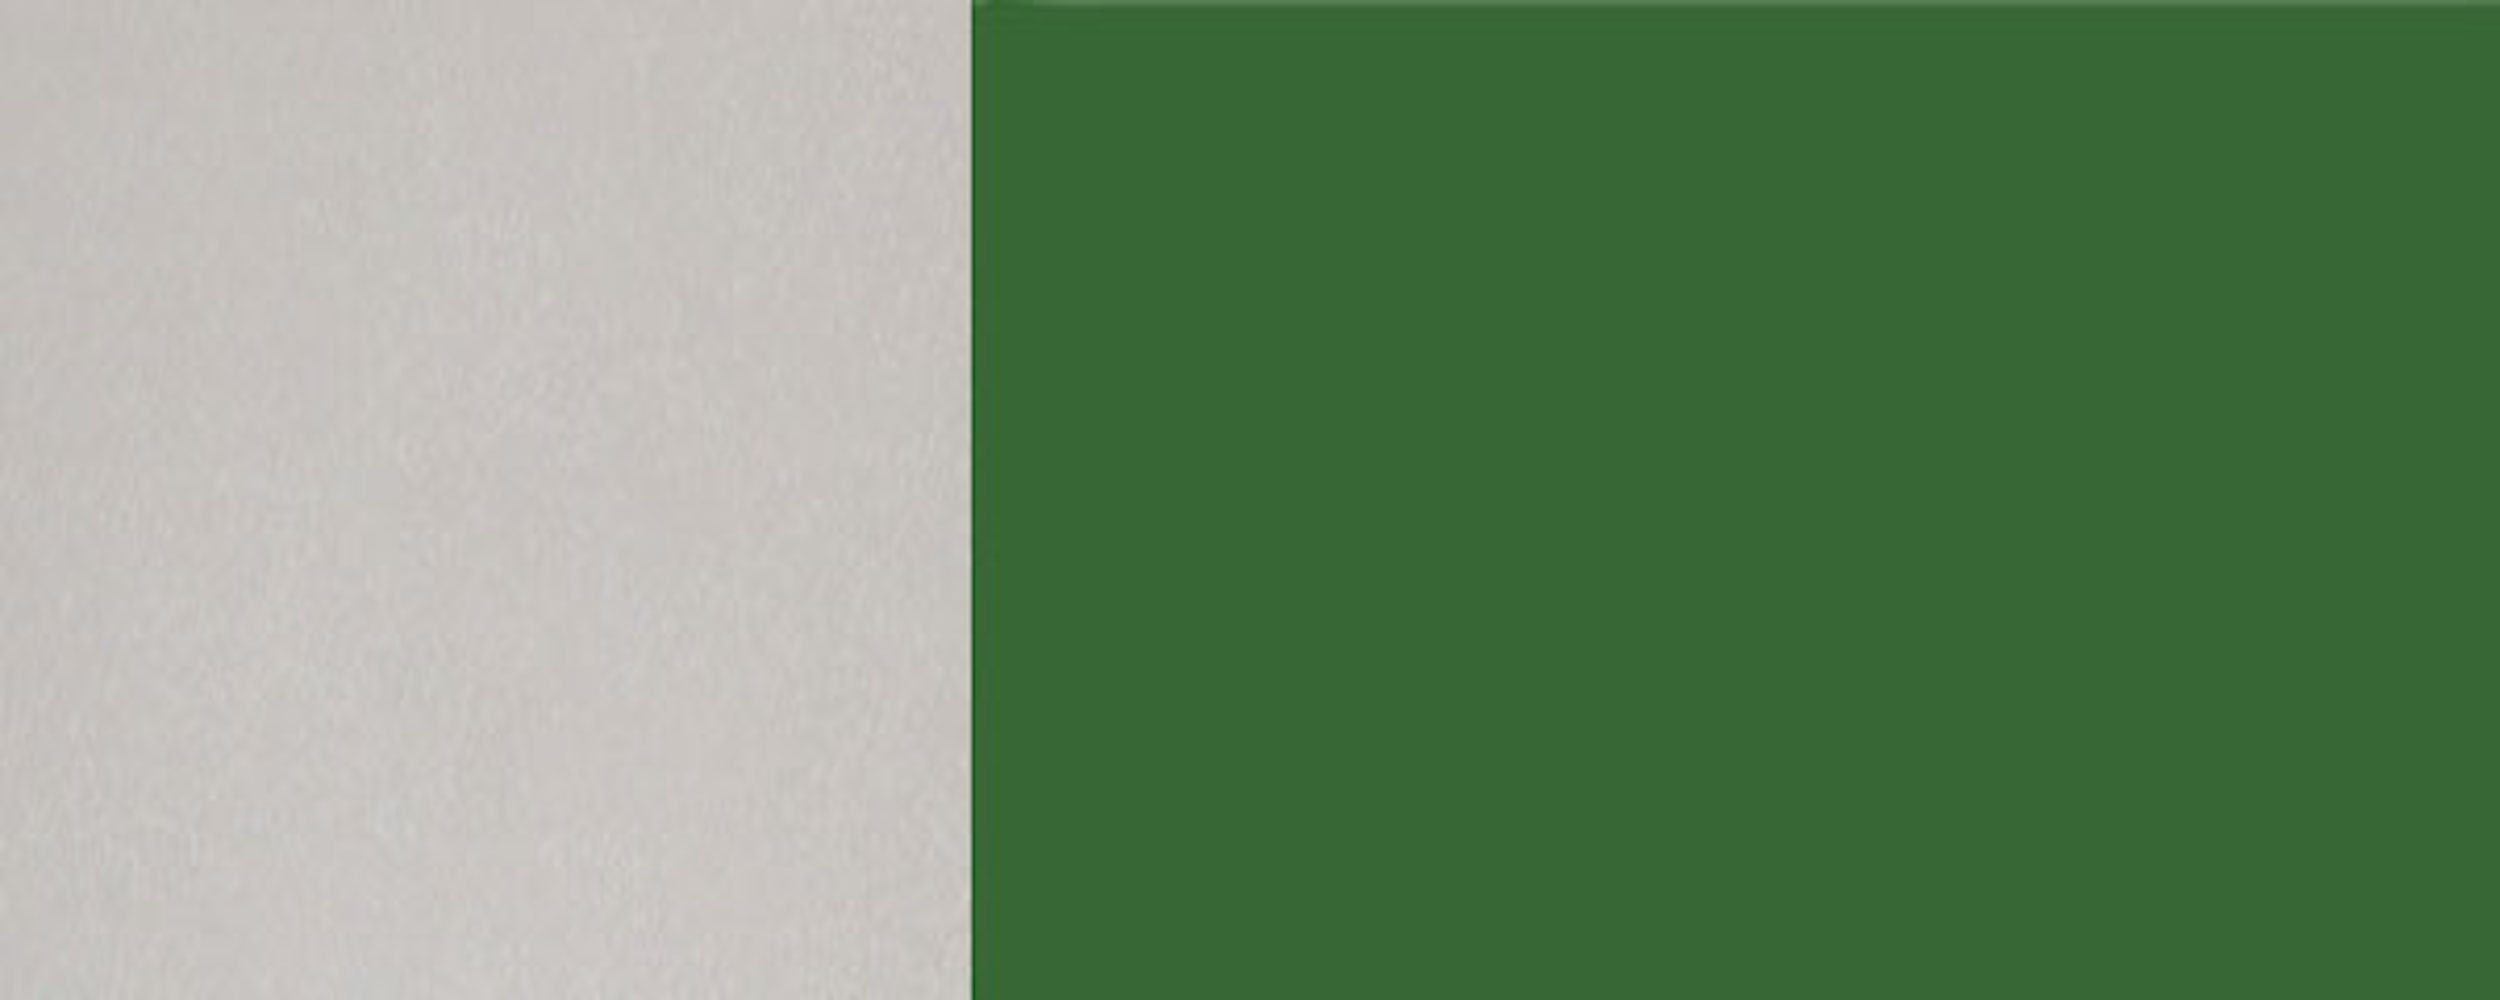 Ausführung und Korpusfarbe smaragdgrün Klapphängeschrank (Florence) 6001 Feldmann-Wohnen 60cm Florence grifflos RAL wählbar Front-, 1-türig Hochglanz